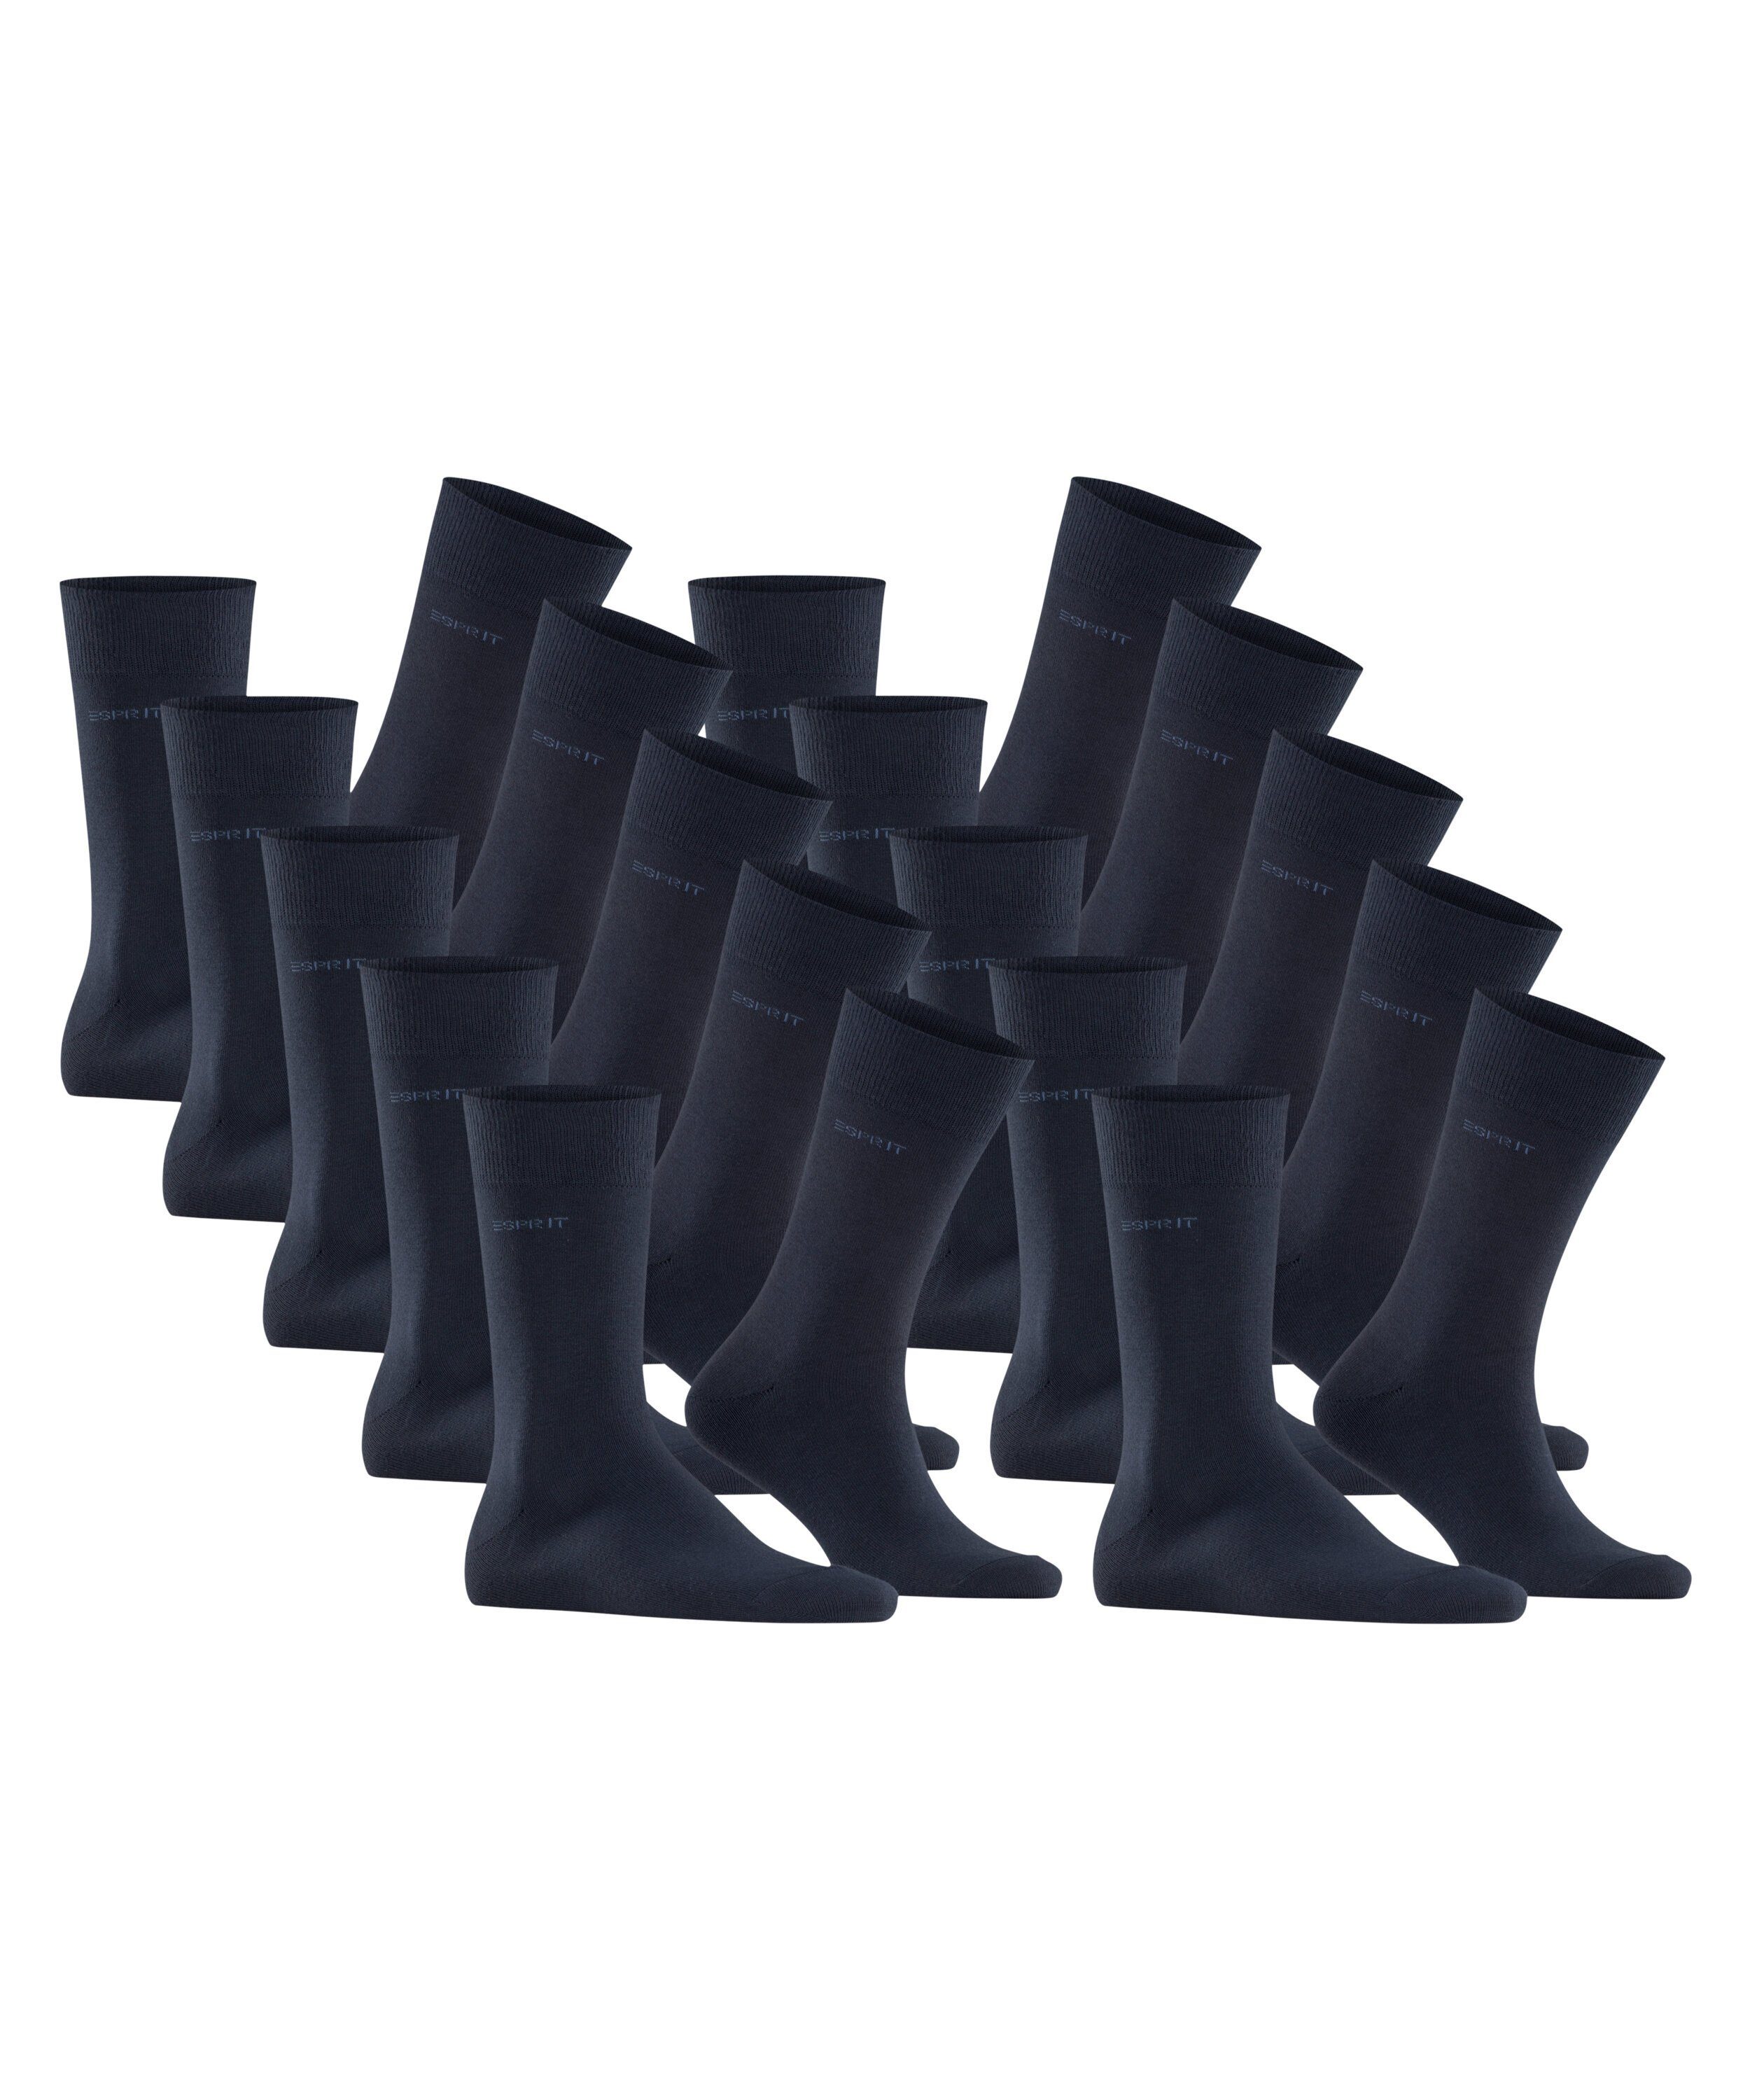 10-Pack Esprit Socken marine Uni (10-Paar) (6120)